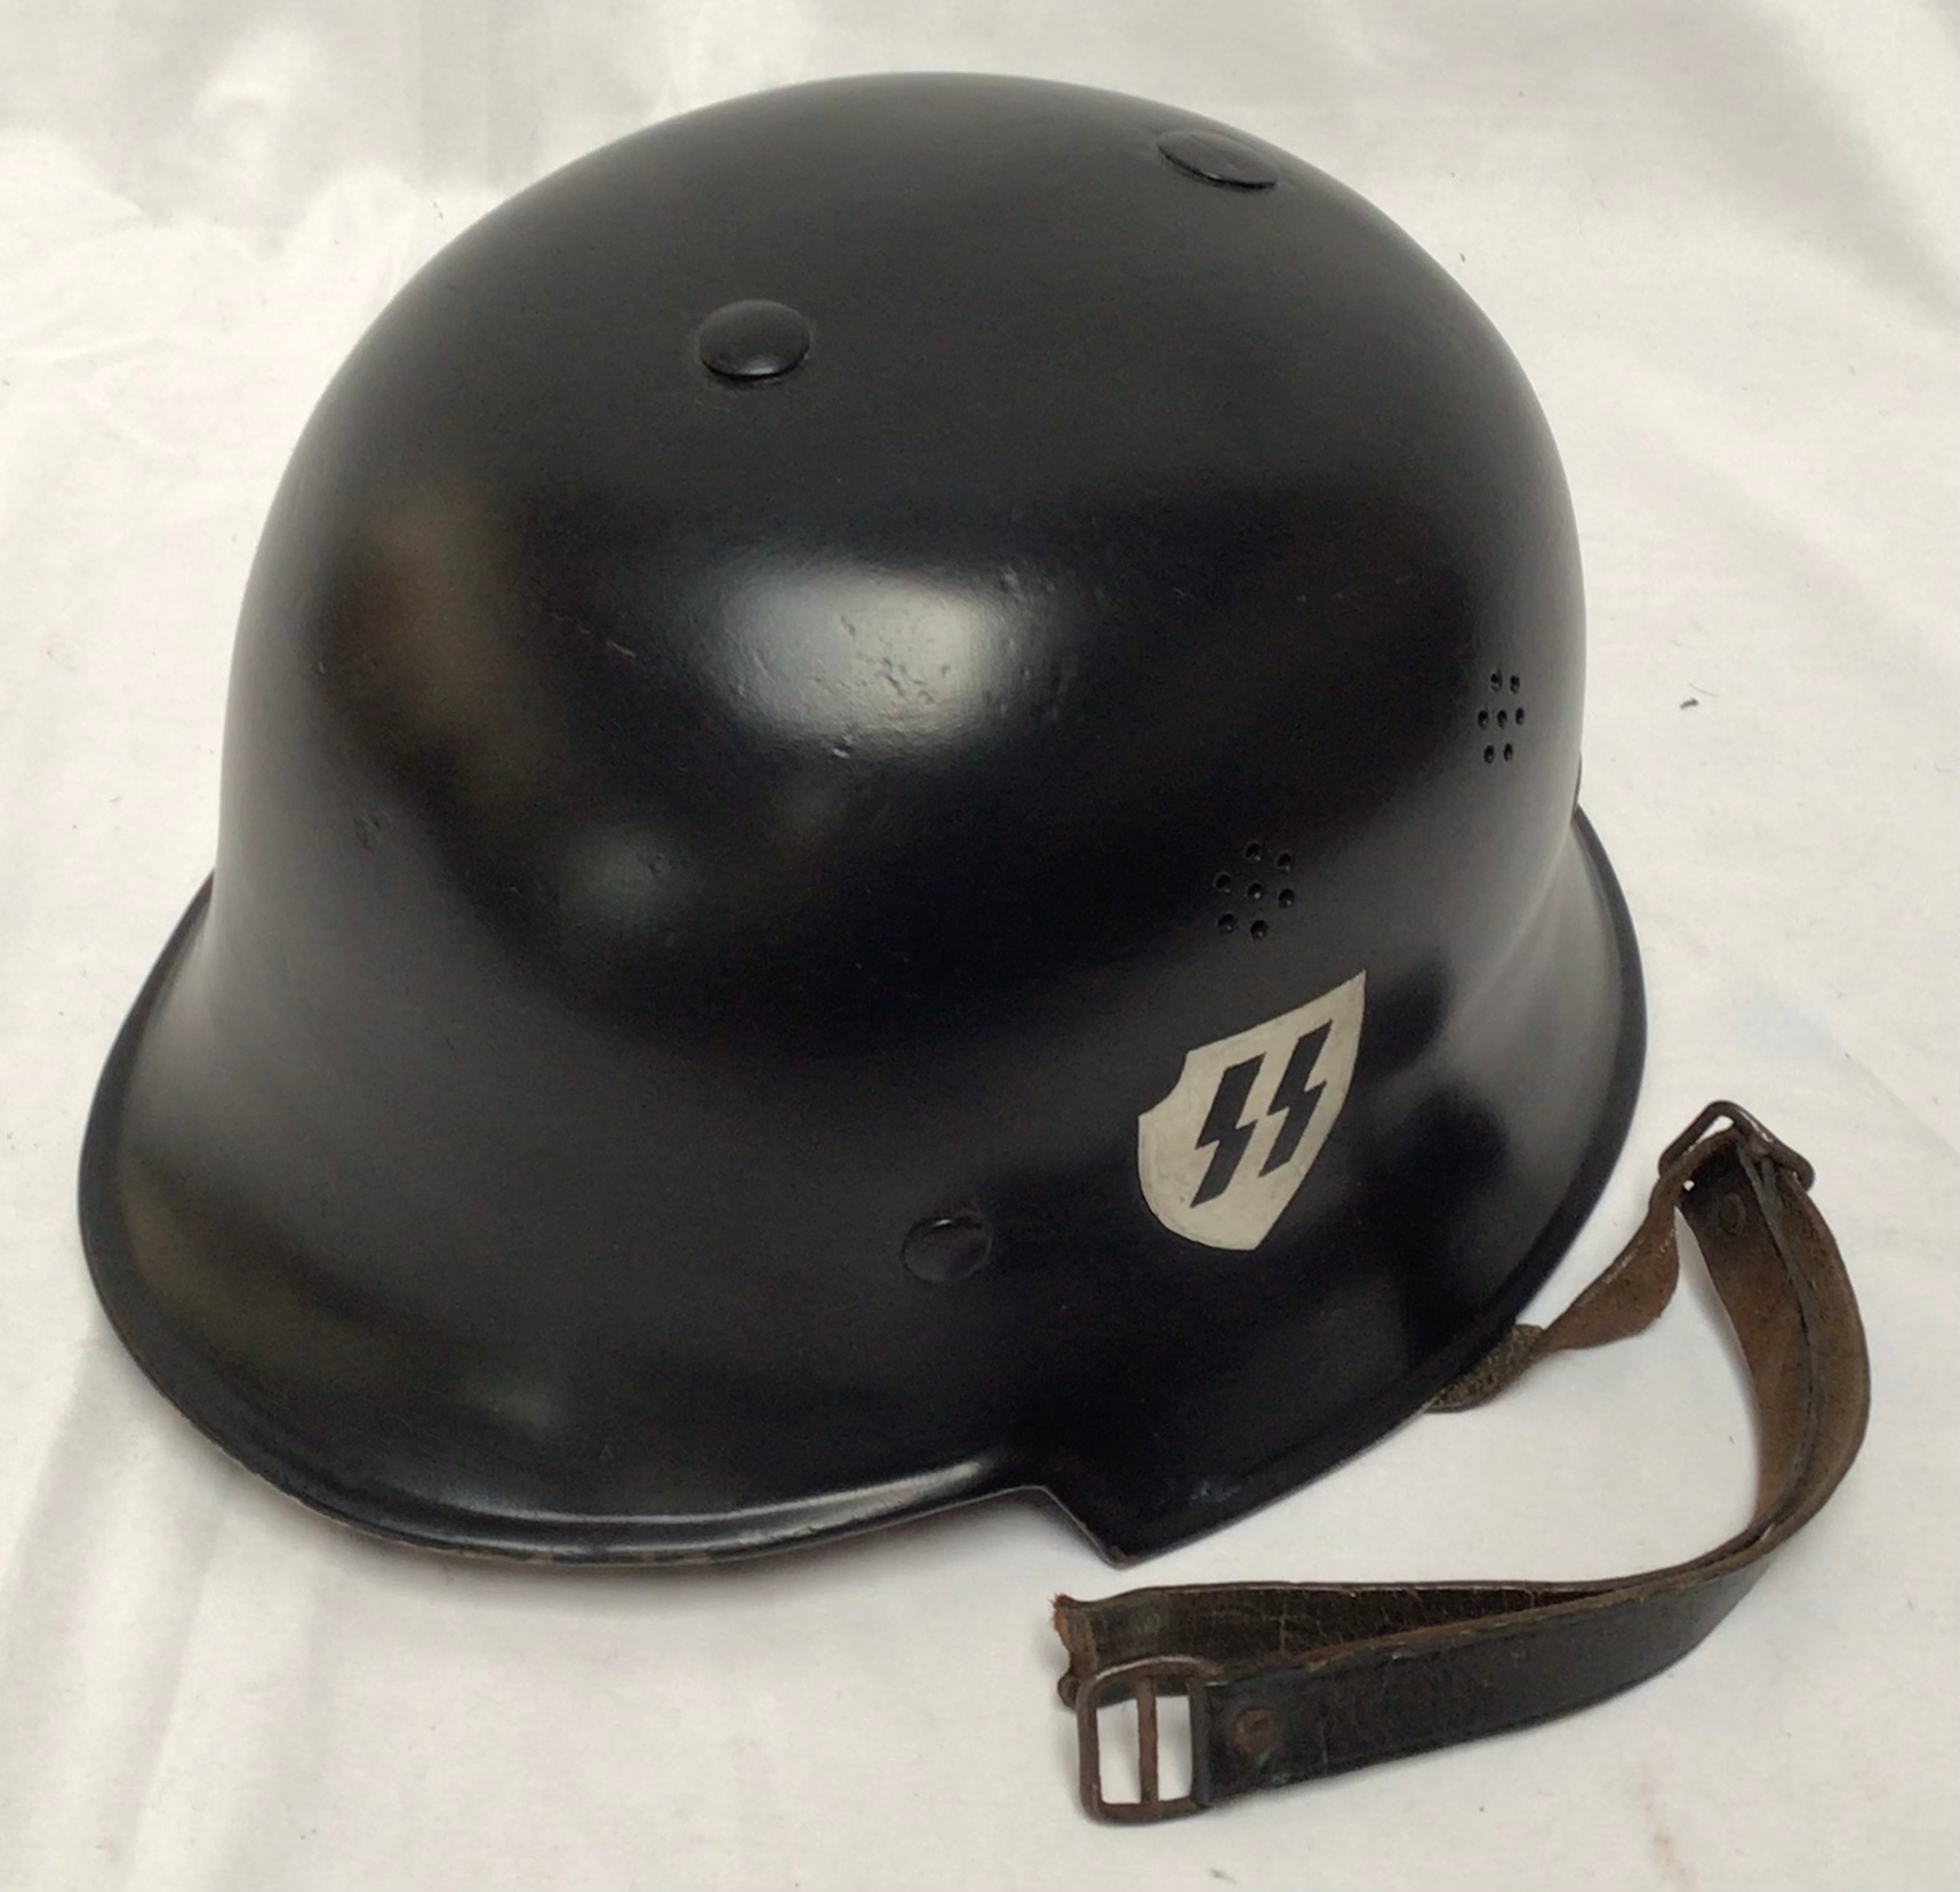 A WWII German Third Reich M34 Civil Defence Feuerwehr (Fire Service) Helmet, black painted with